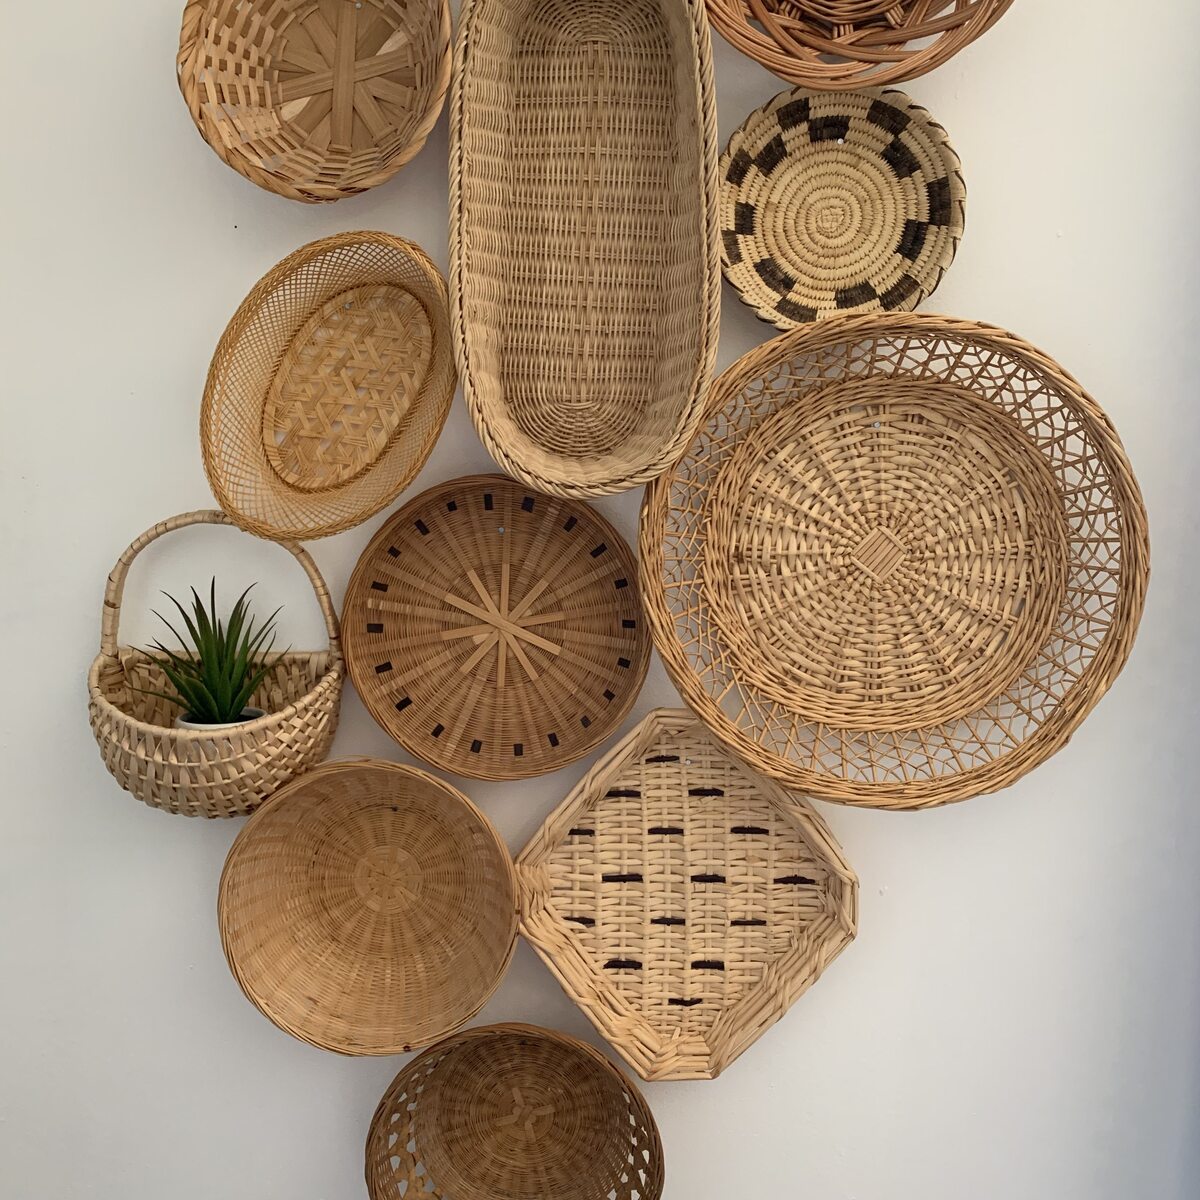 How To Use Baskets Around Home Decor